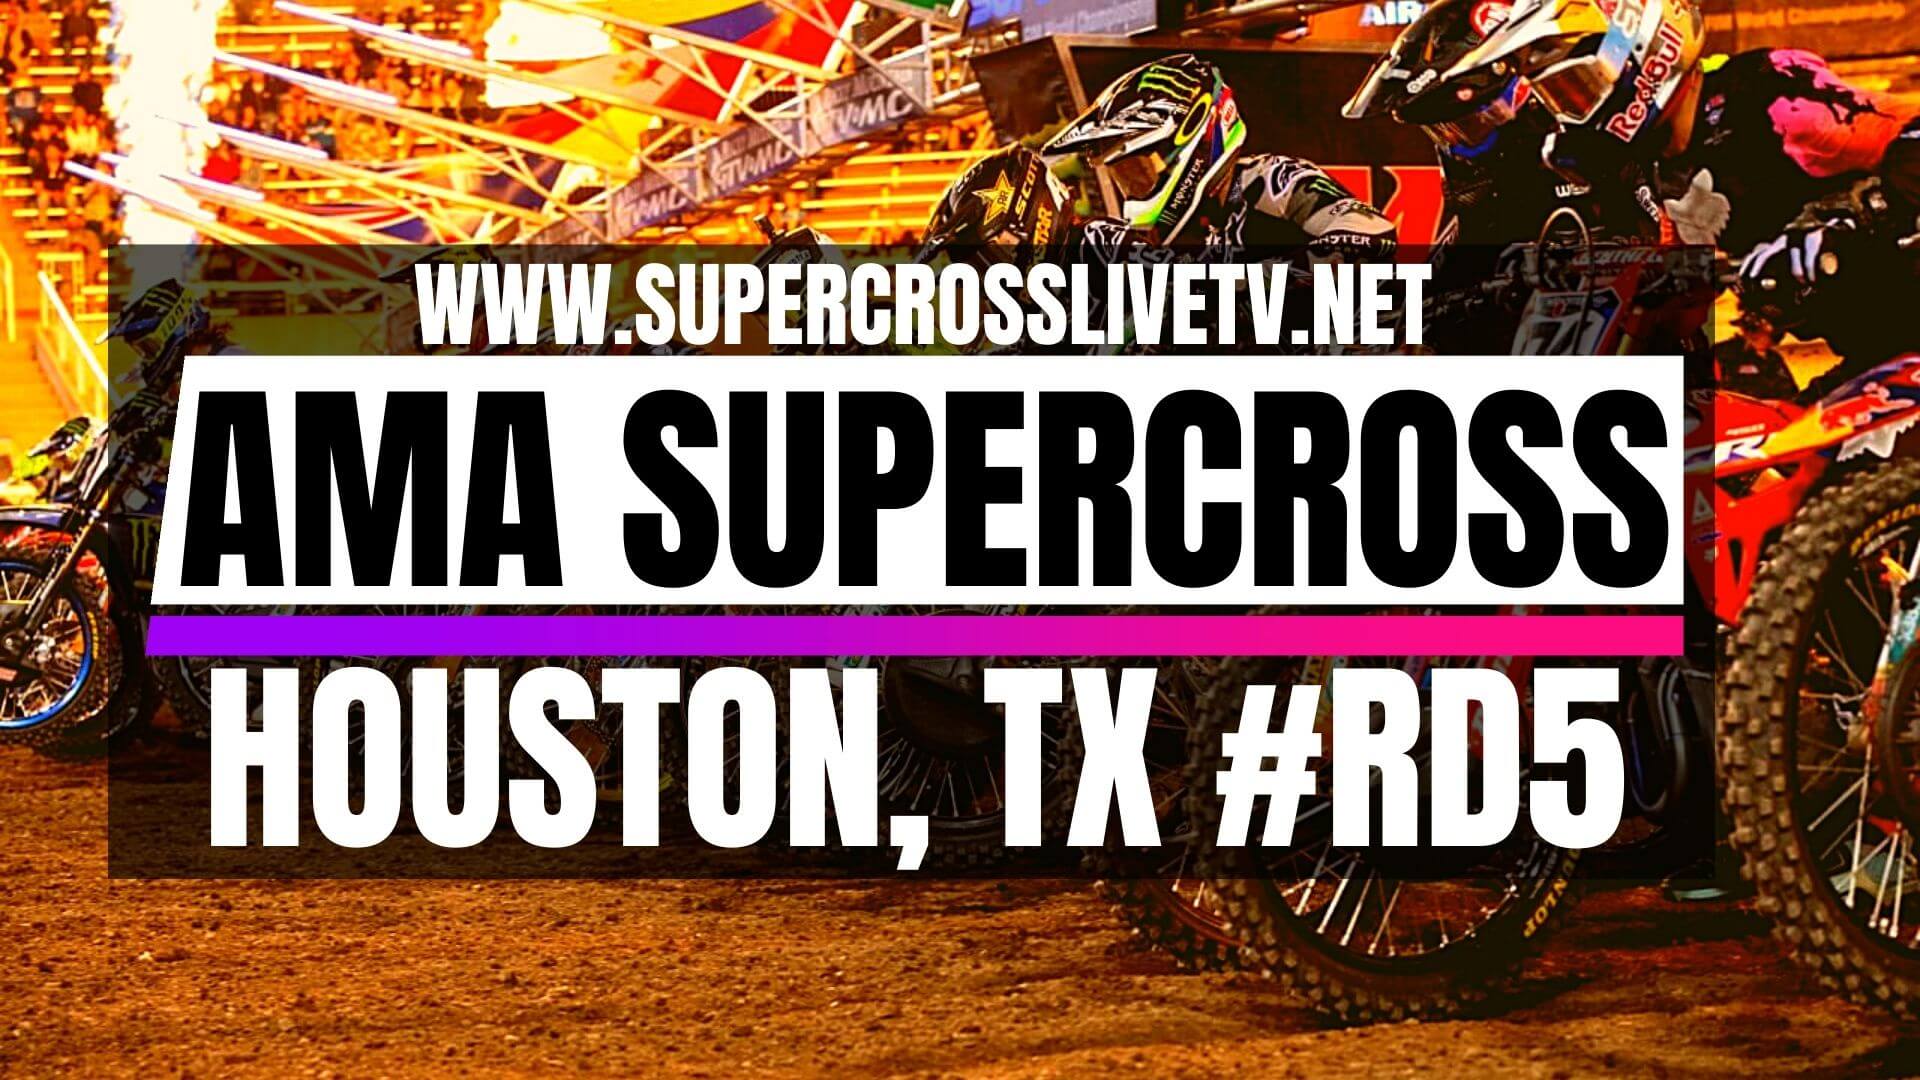 Houston Live Stream AMA Supercross TV